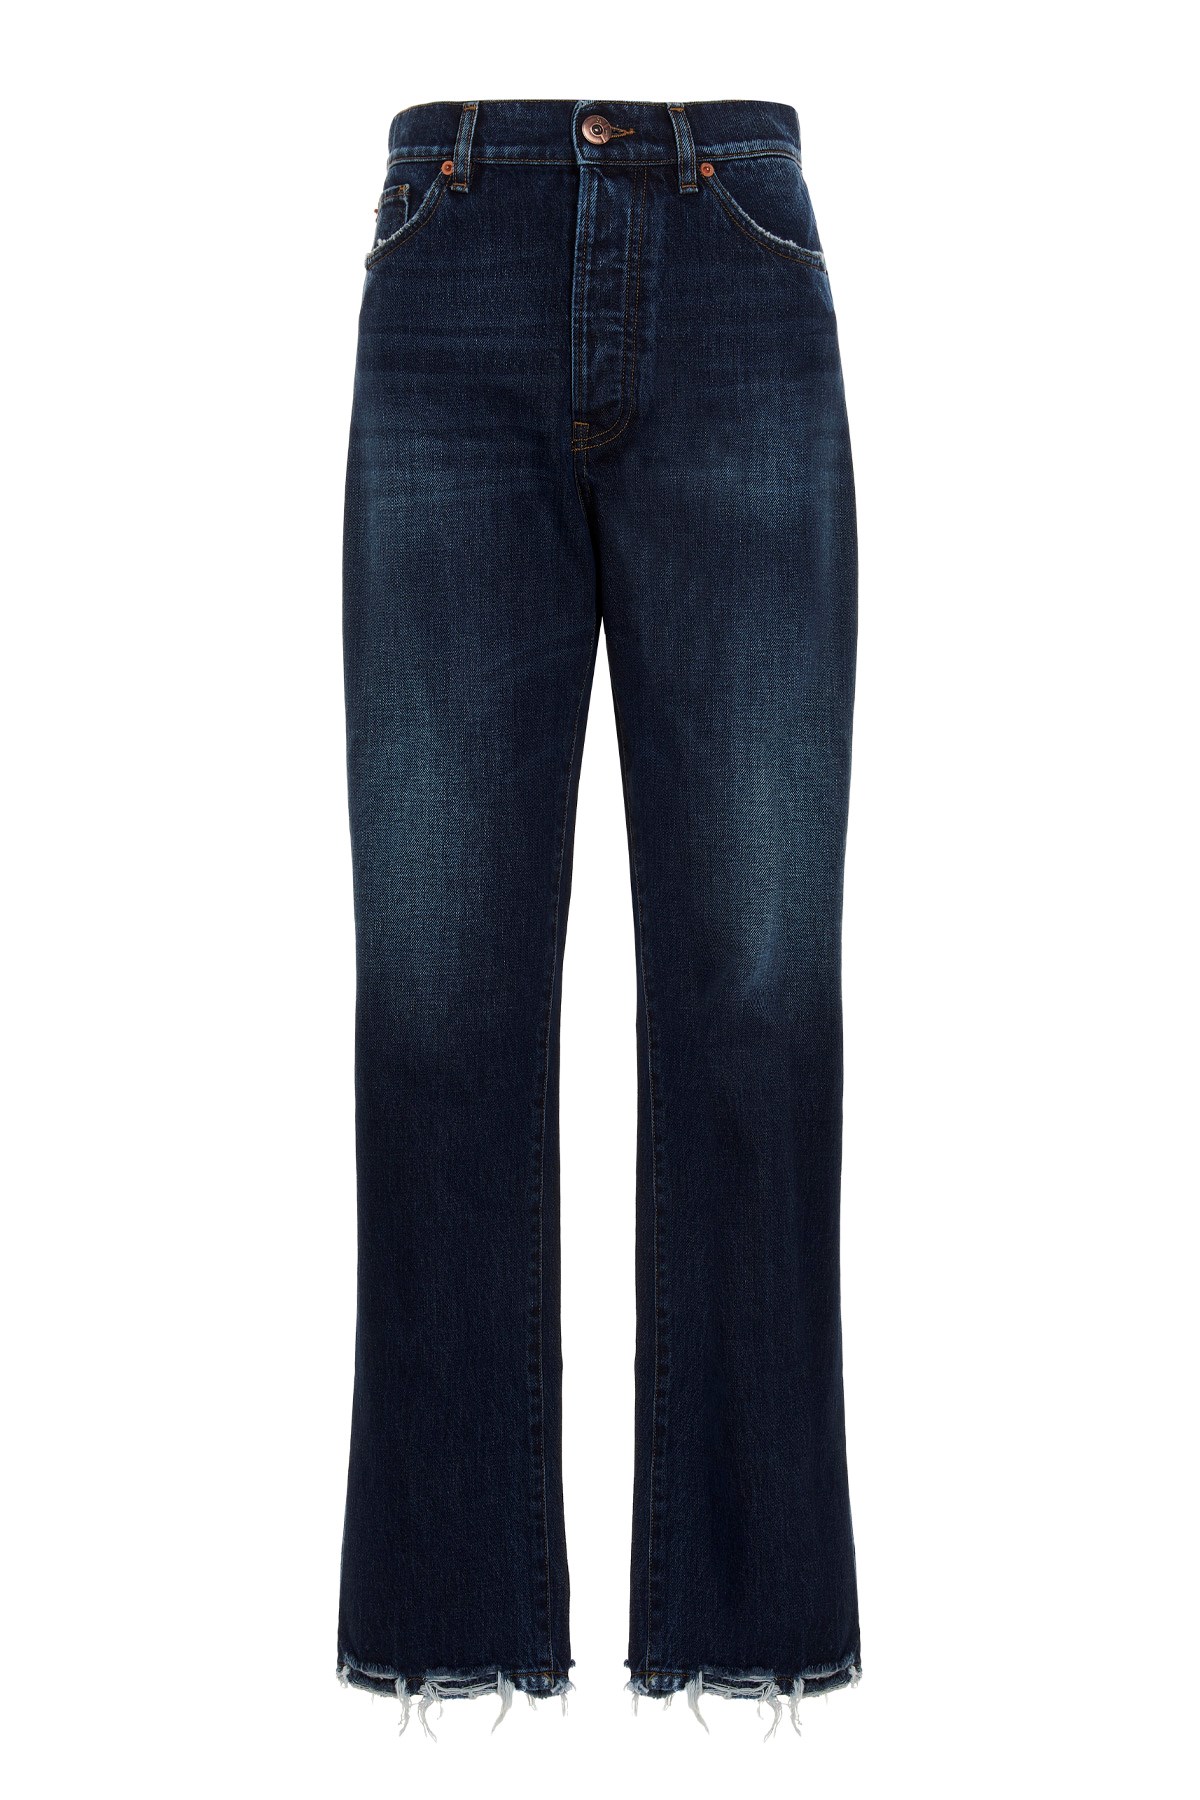 3X1 'Sabina Vintage Hem’ Jeans